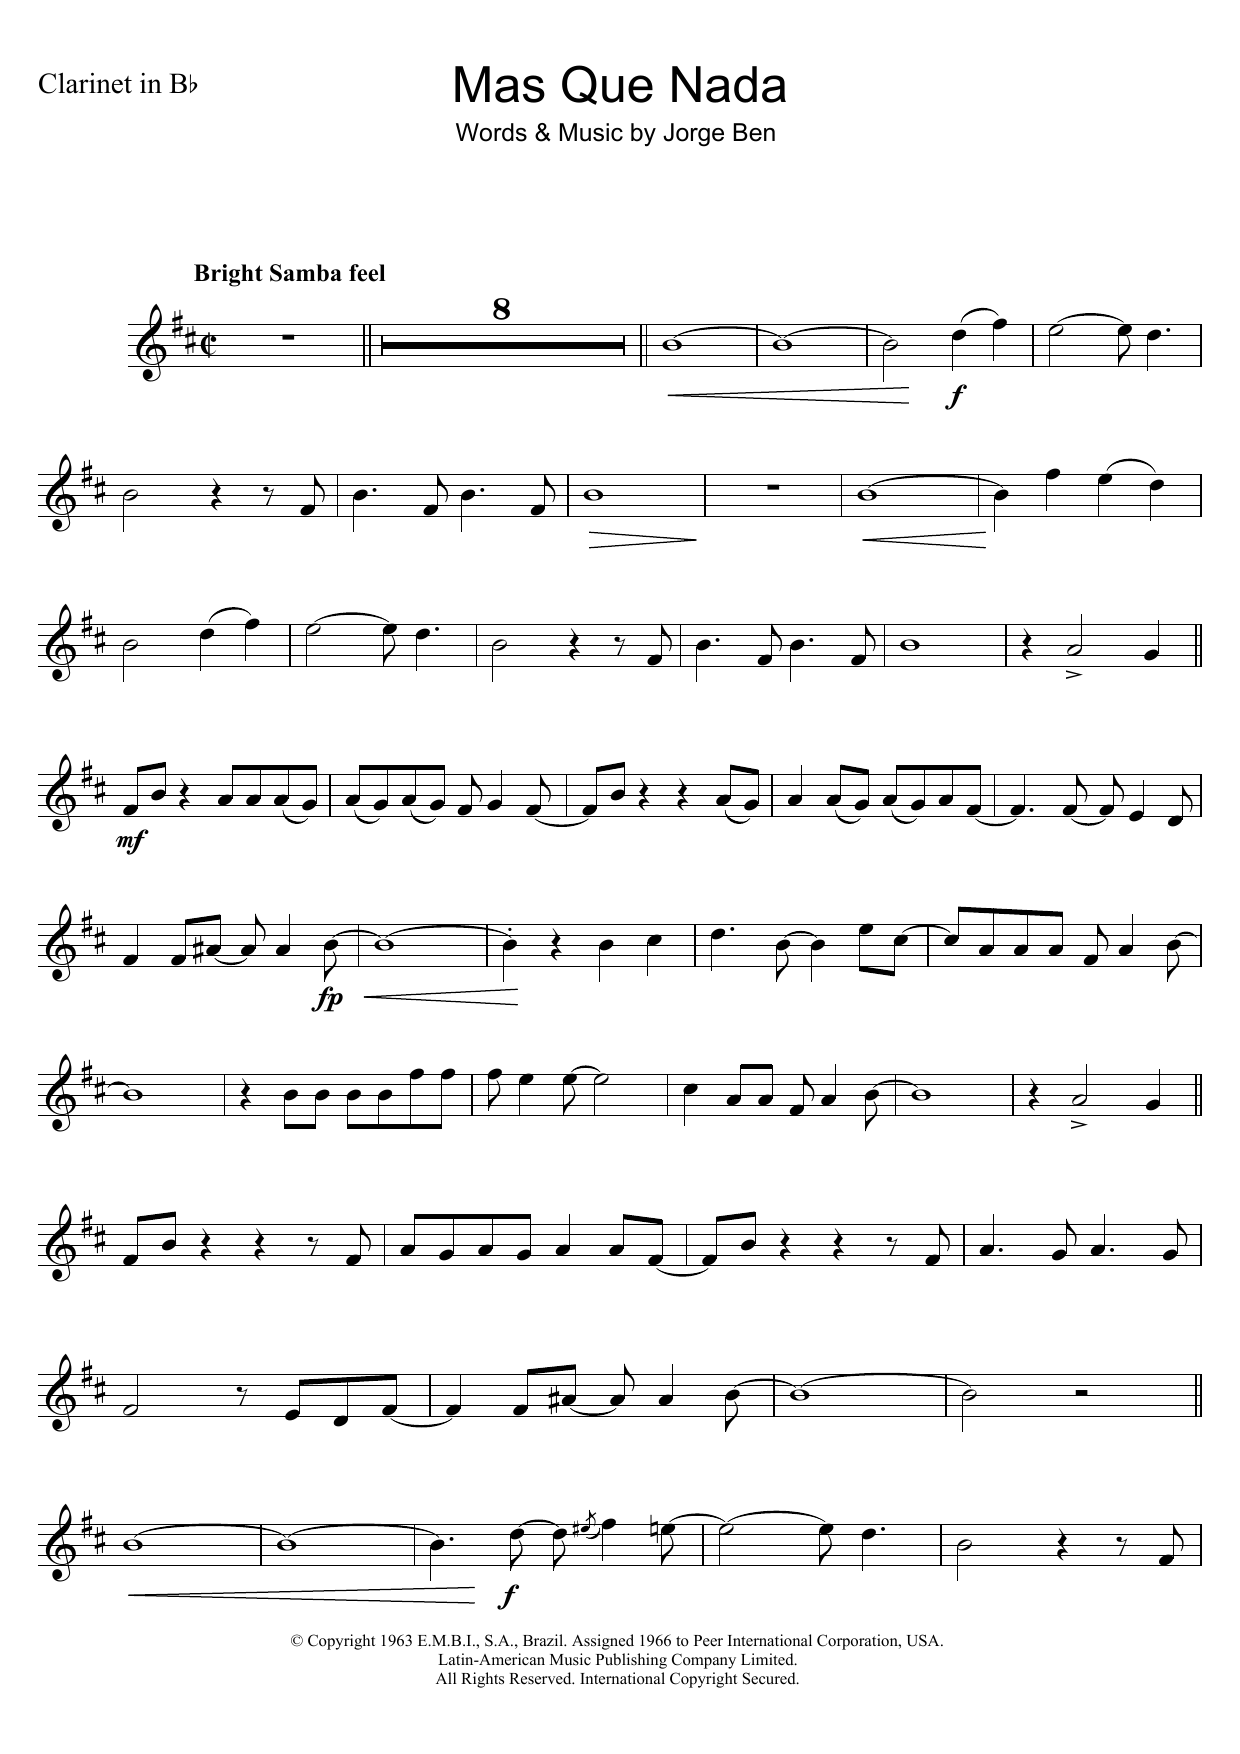 Jorge Ben Mas Que Nada (Say No More) Sheet Music Notes & Chords for Alto Saxophone - Download or Print PDF